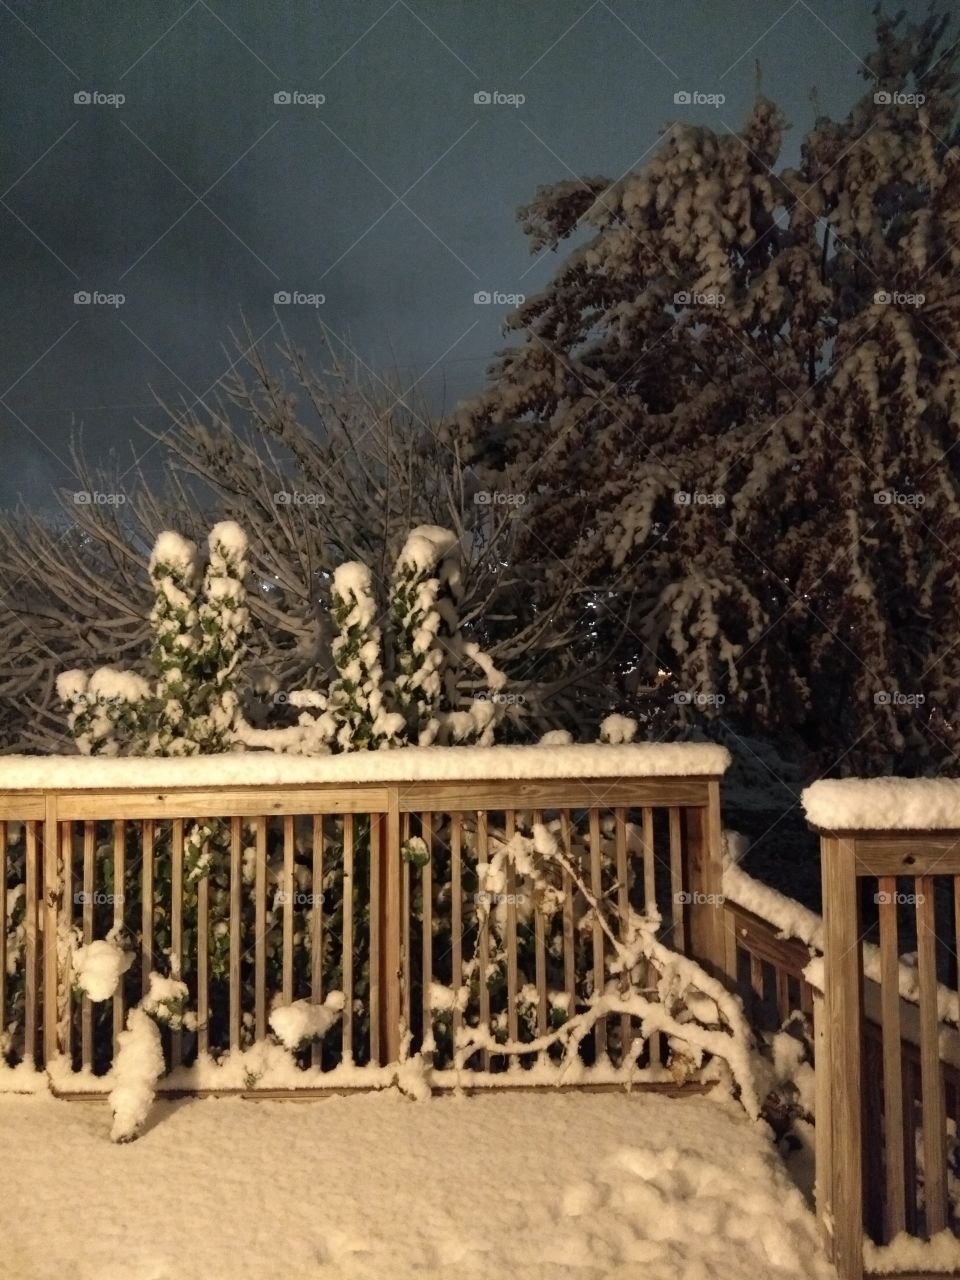 backyard mid snow storm.  Missouri weather.